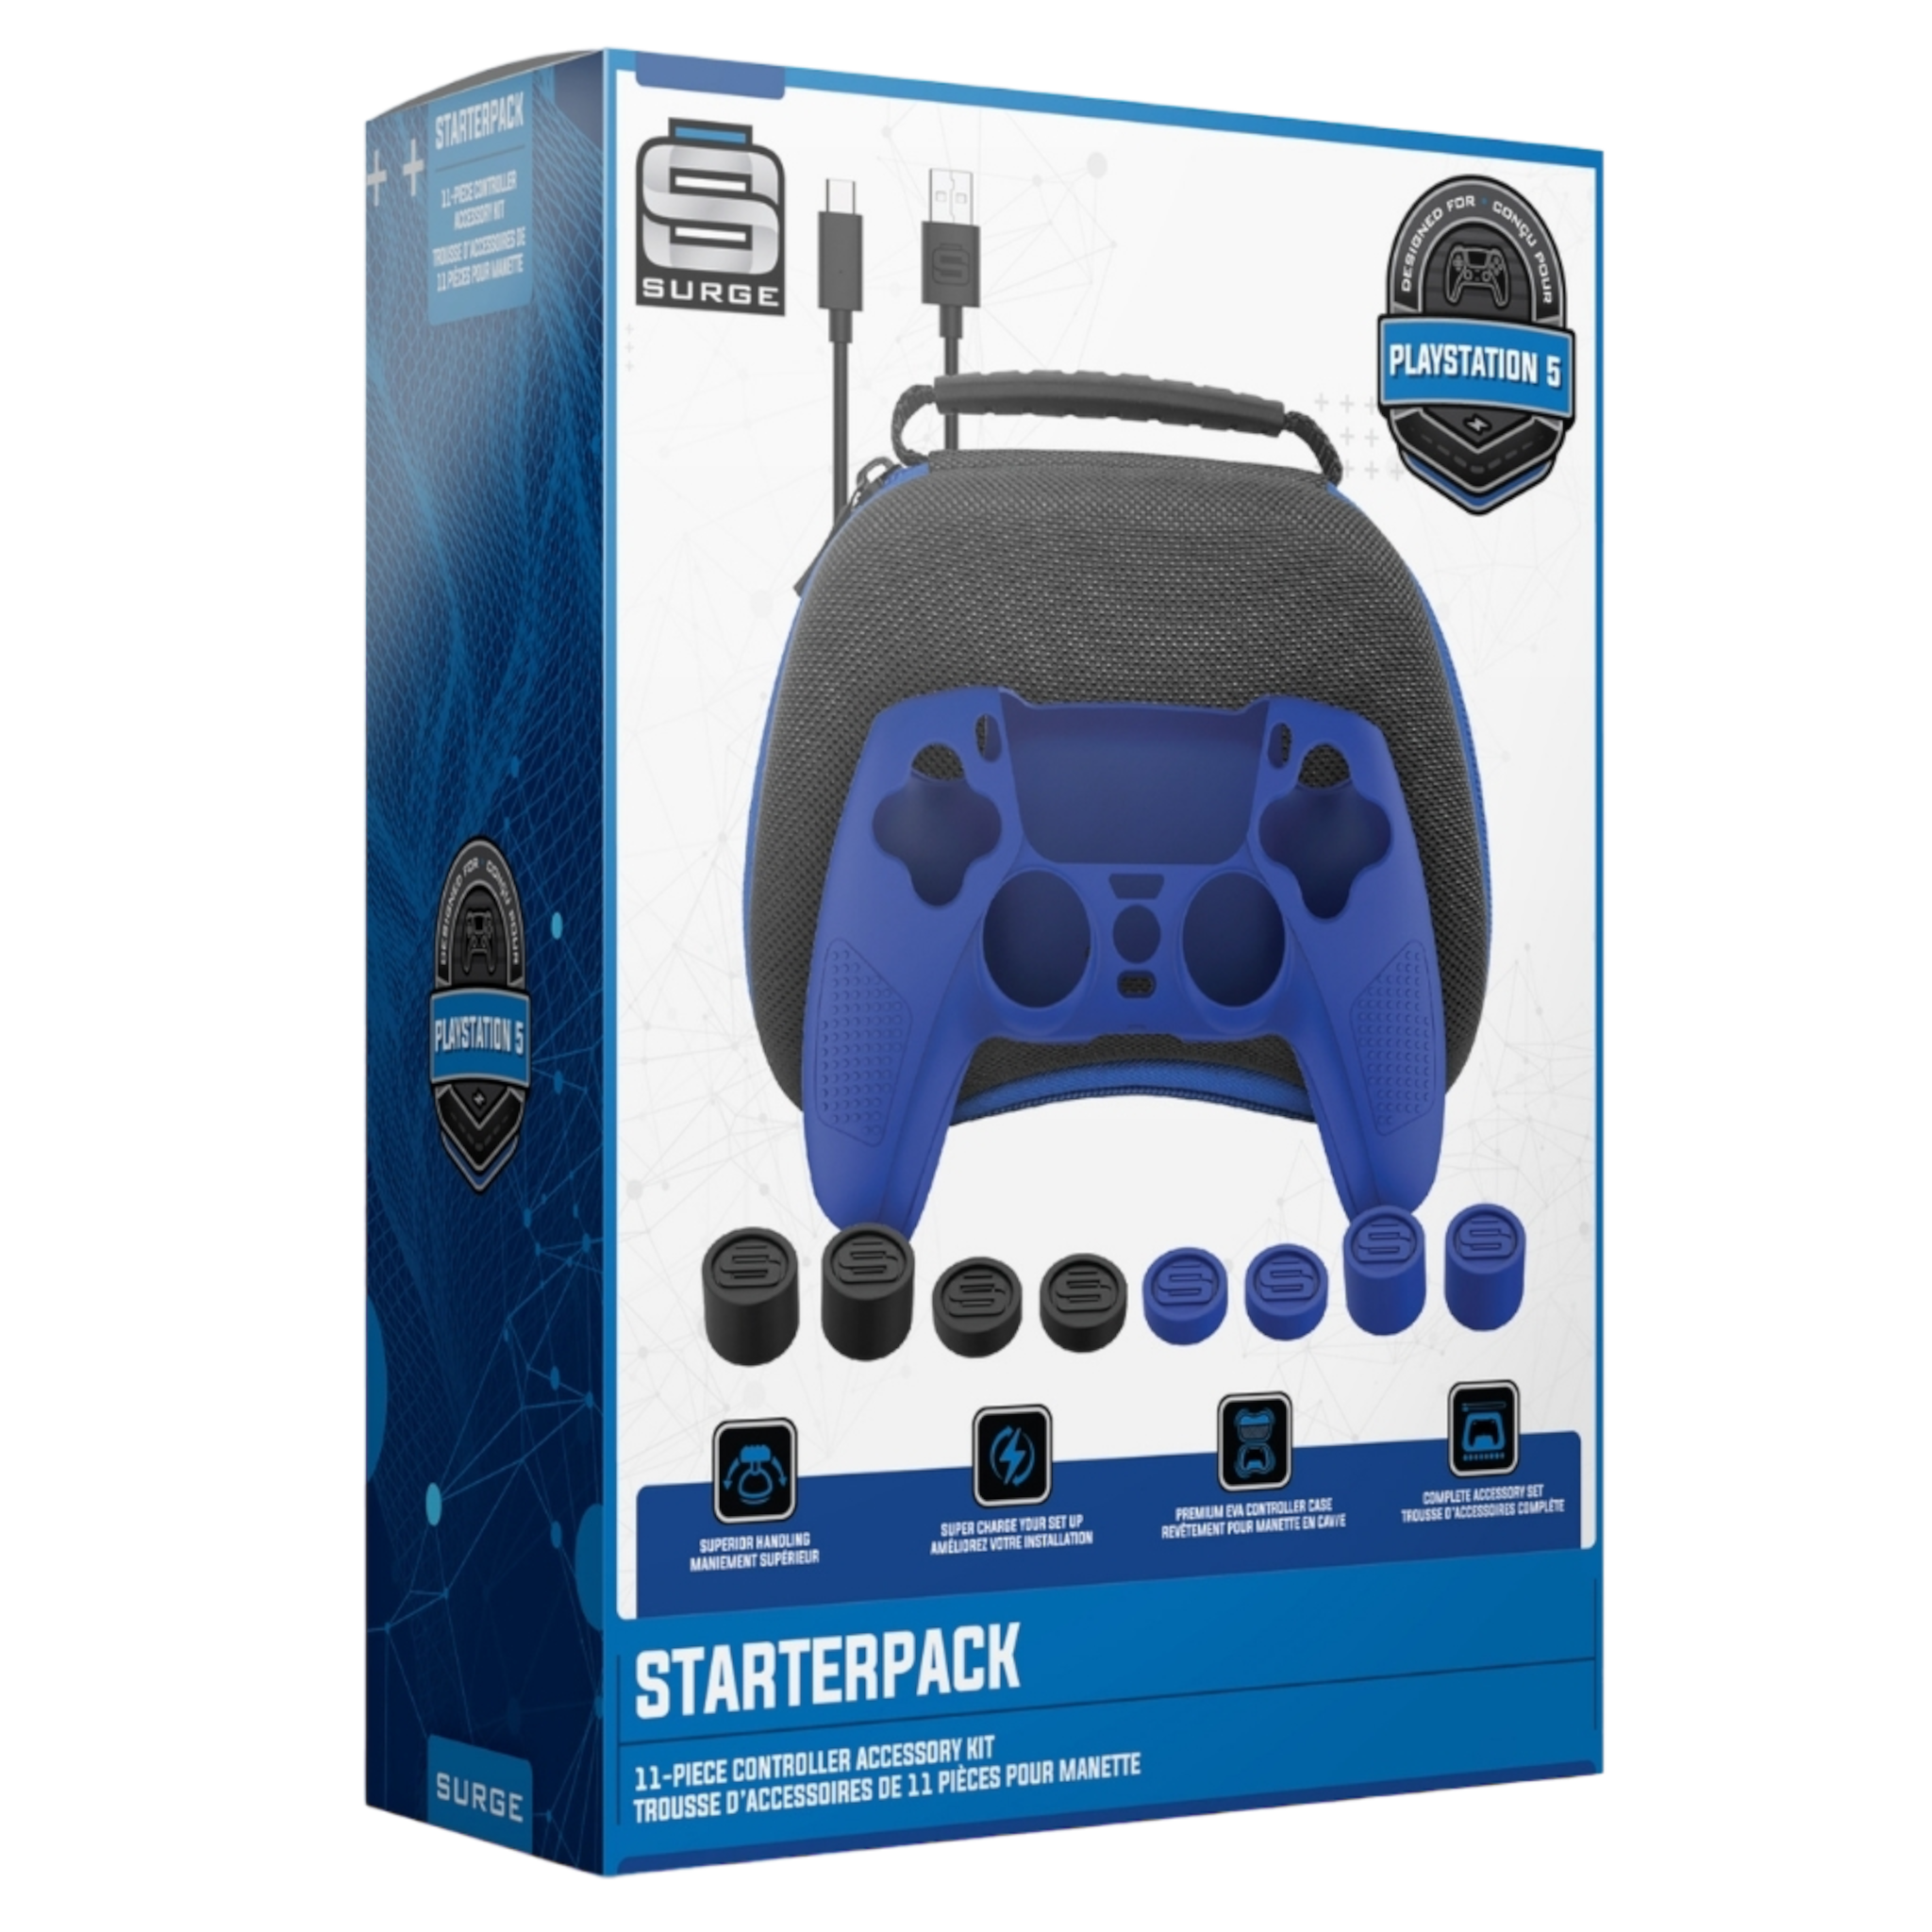 Surge Pro Gamer Starter Pack 11-Piece Accessory Kit - PlayStation 5 - Pro-Distributing